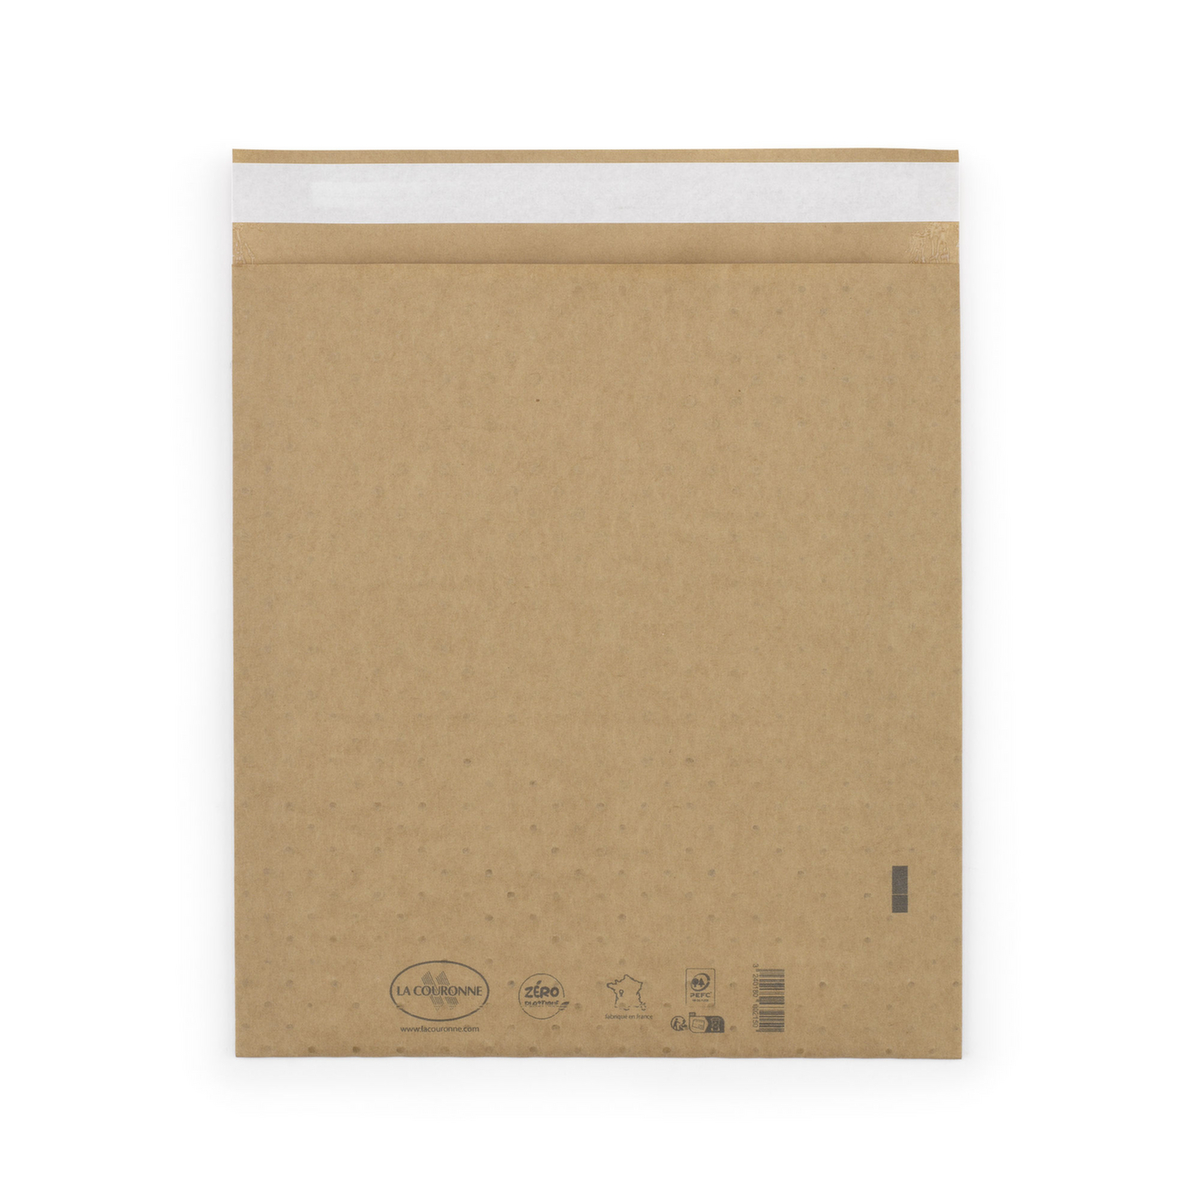 Luftpolsterpapier-Versandtasche Standard 1 ZOOM